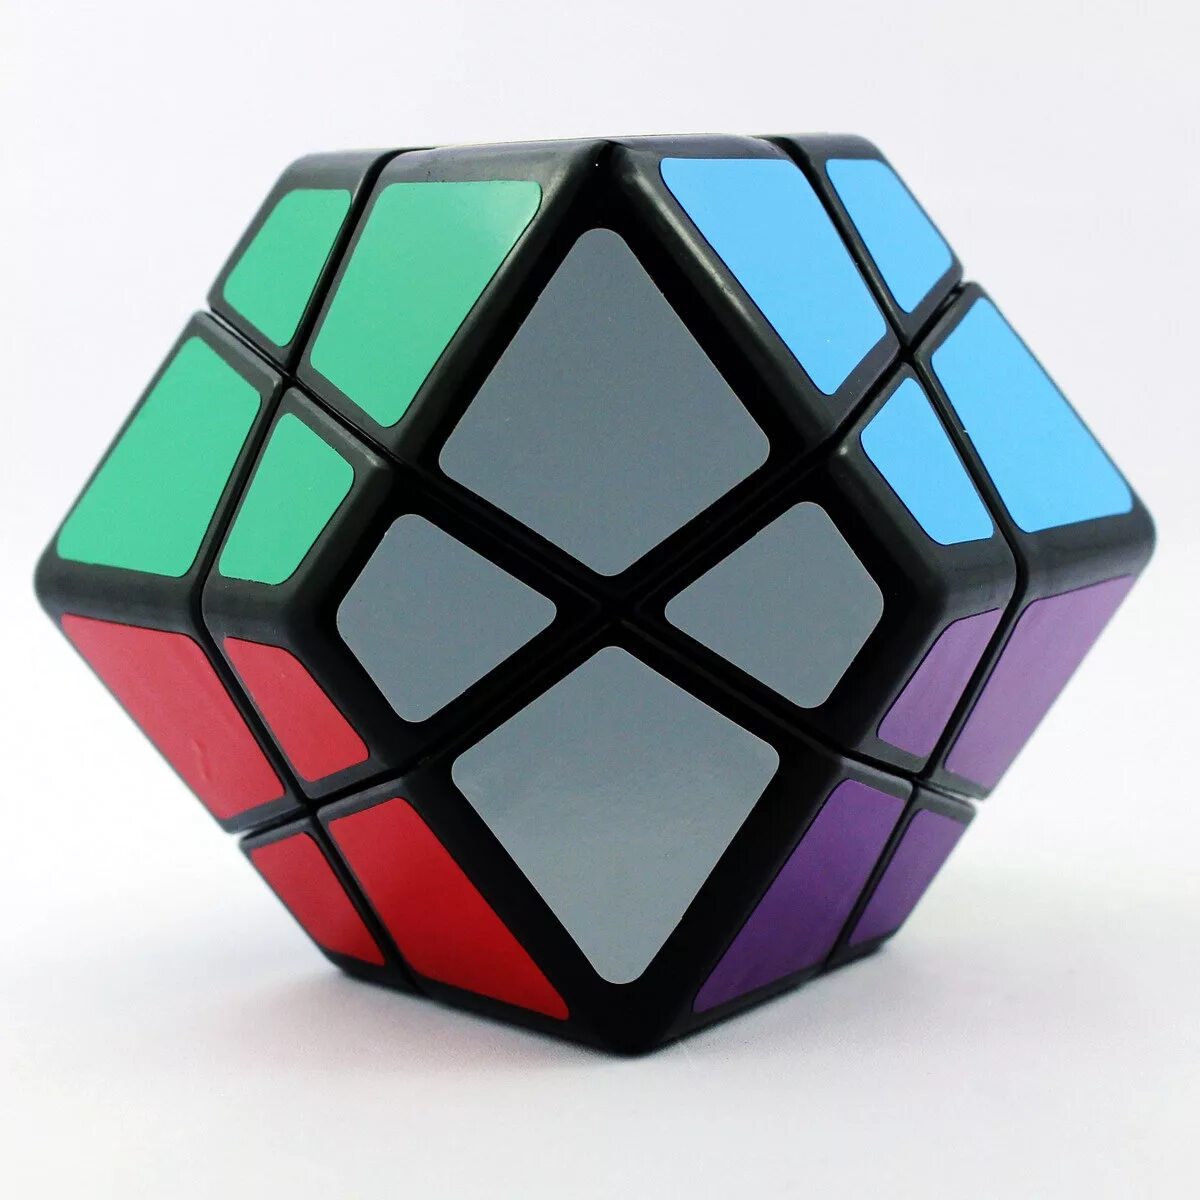 Kubik. Кибик рубик. Двенадцатигранник кубик рубик. Додекаэдр кубик Рубика 5х5. Додекаэдр Рубика 2х2.